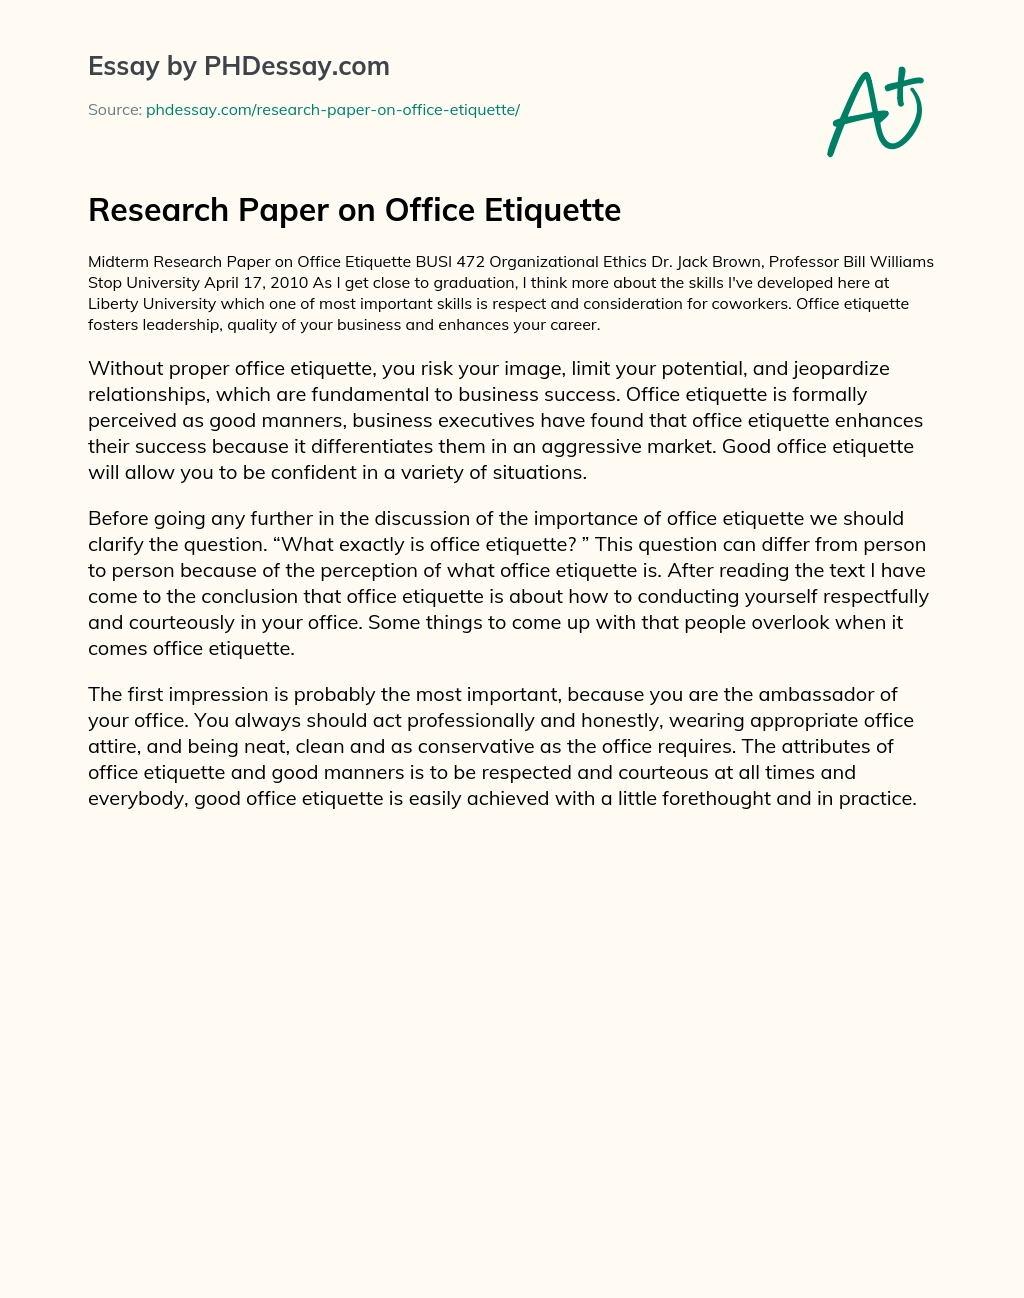 Research Paper on Office Etiquette essay